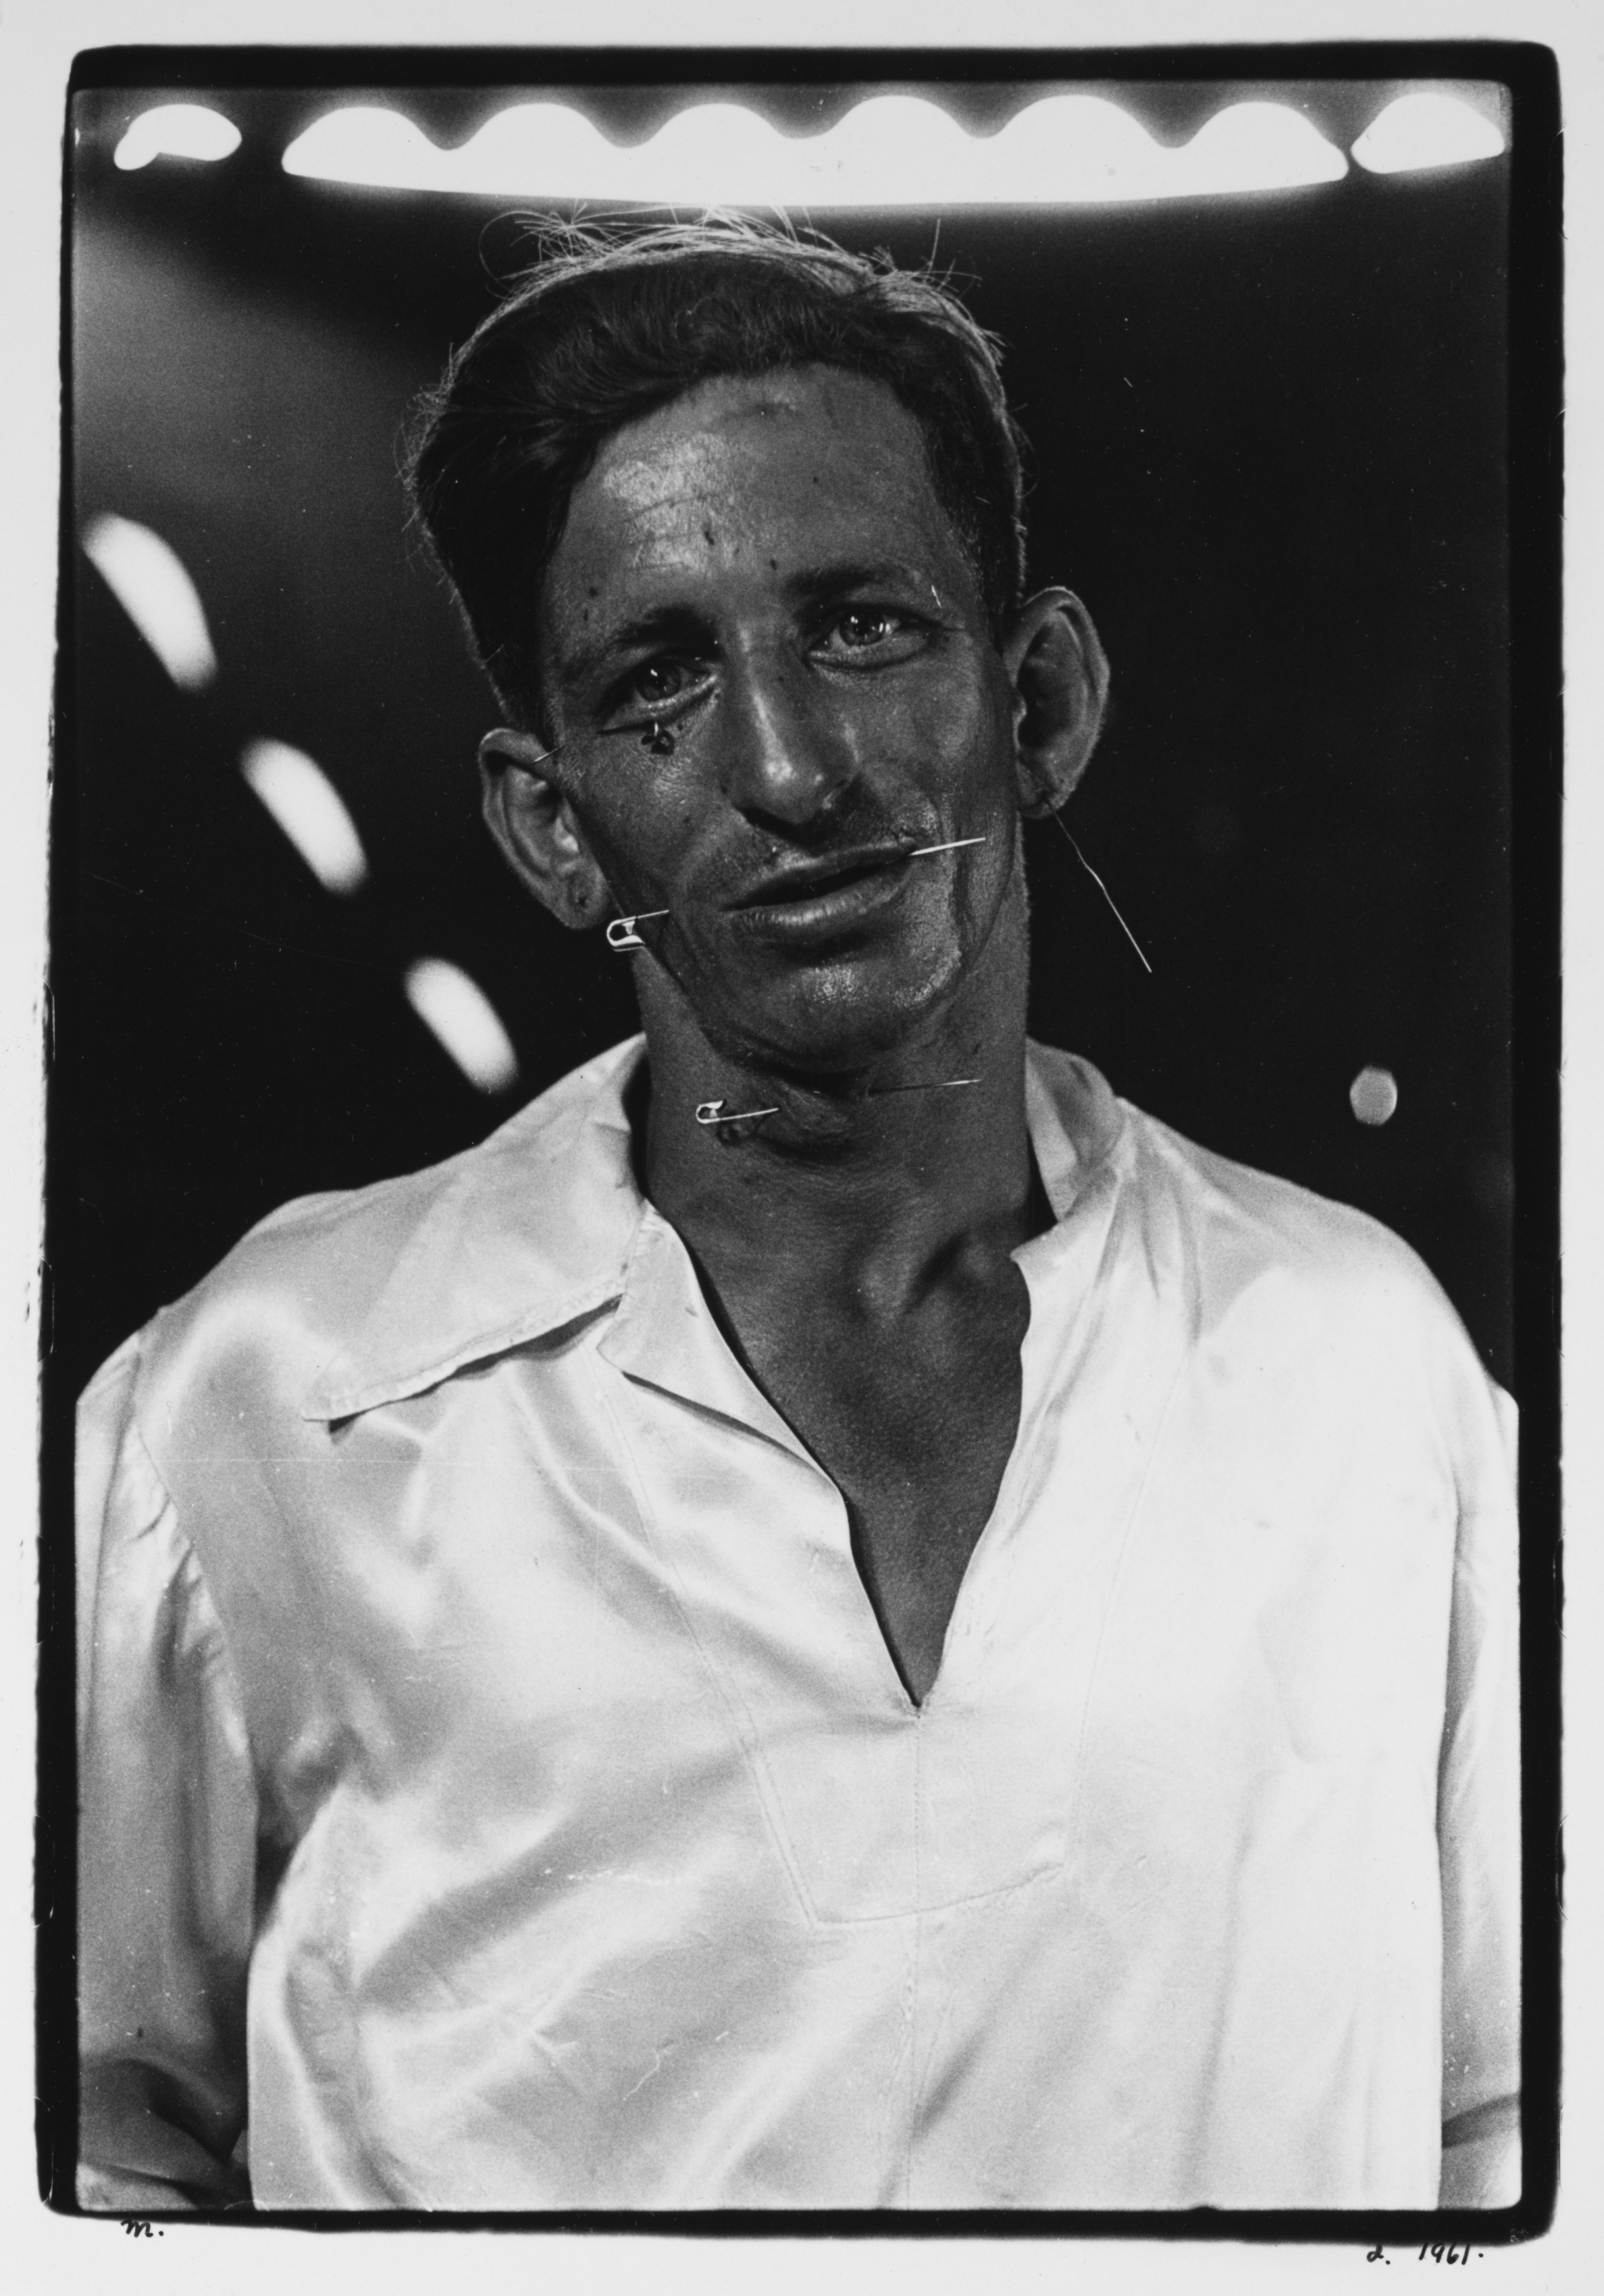 The human pincushion at a carnival in his silk shirt, N.J., 1961